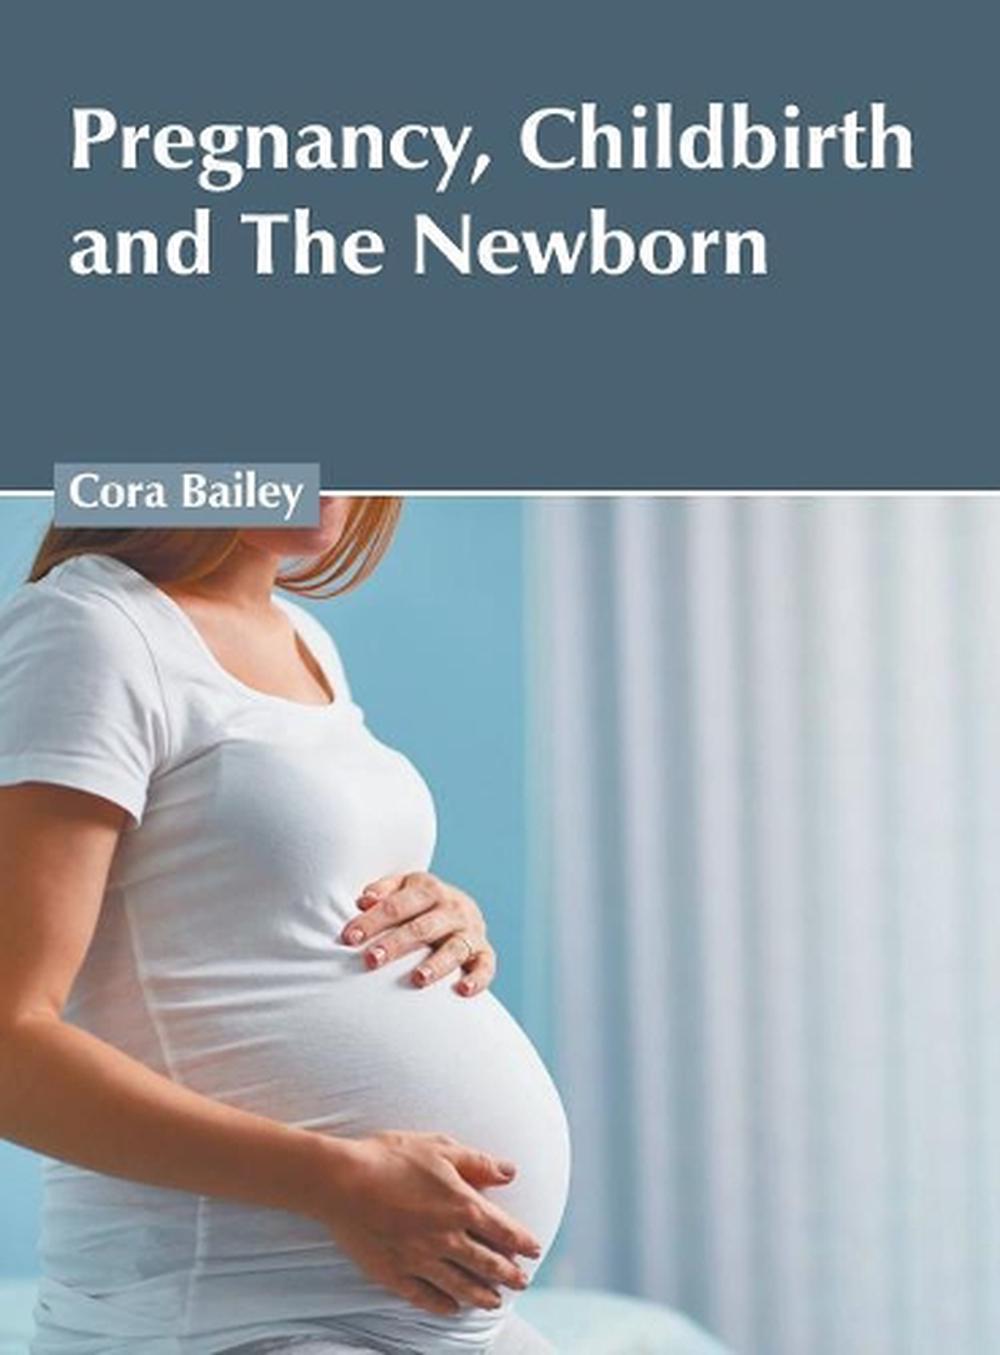 pregnancy childbirth and the newborn by penny simkin